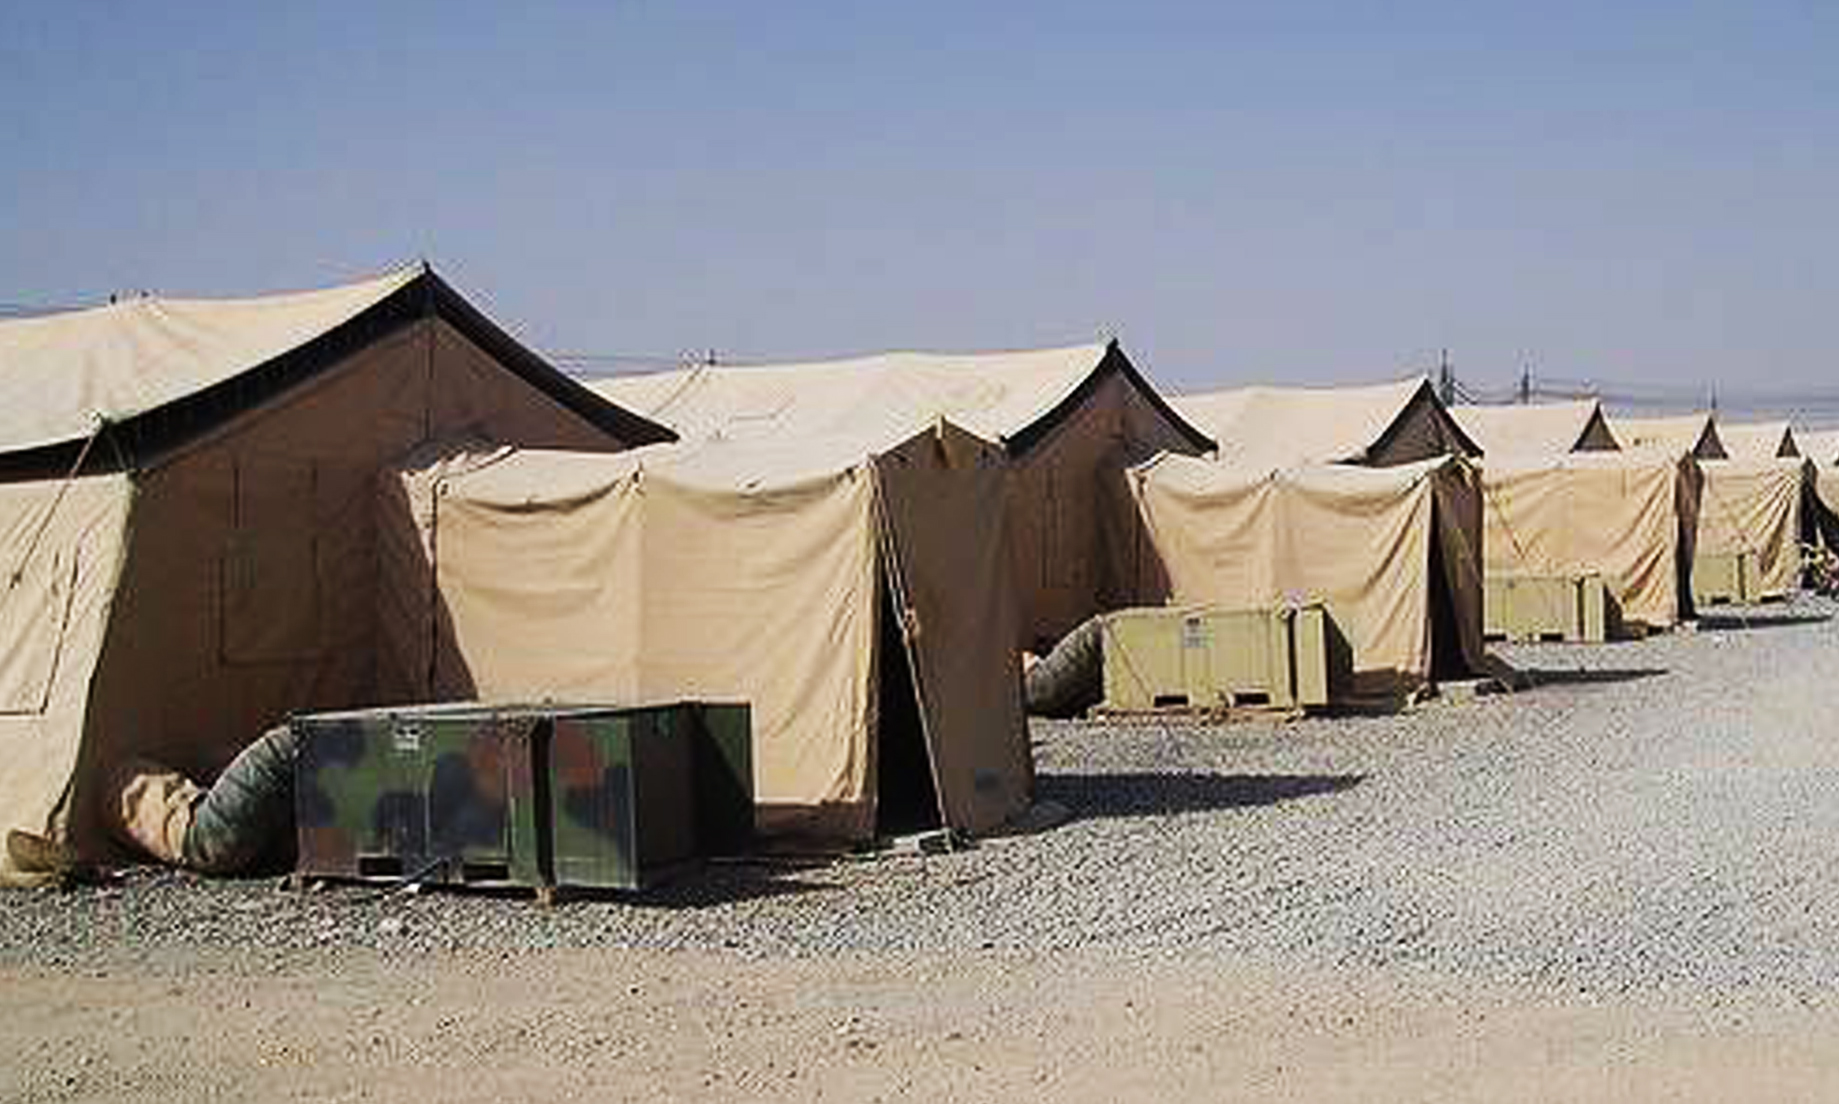 “Grave Concern” Over Health Of 65,000 Displaced, In Syria’s Al-Hol Camp: UN